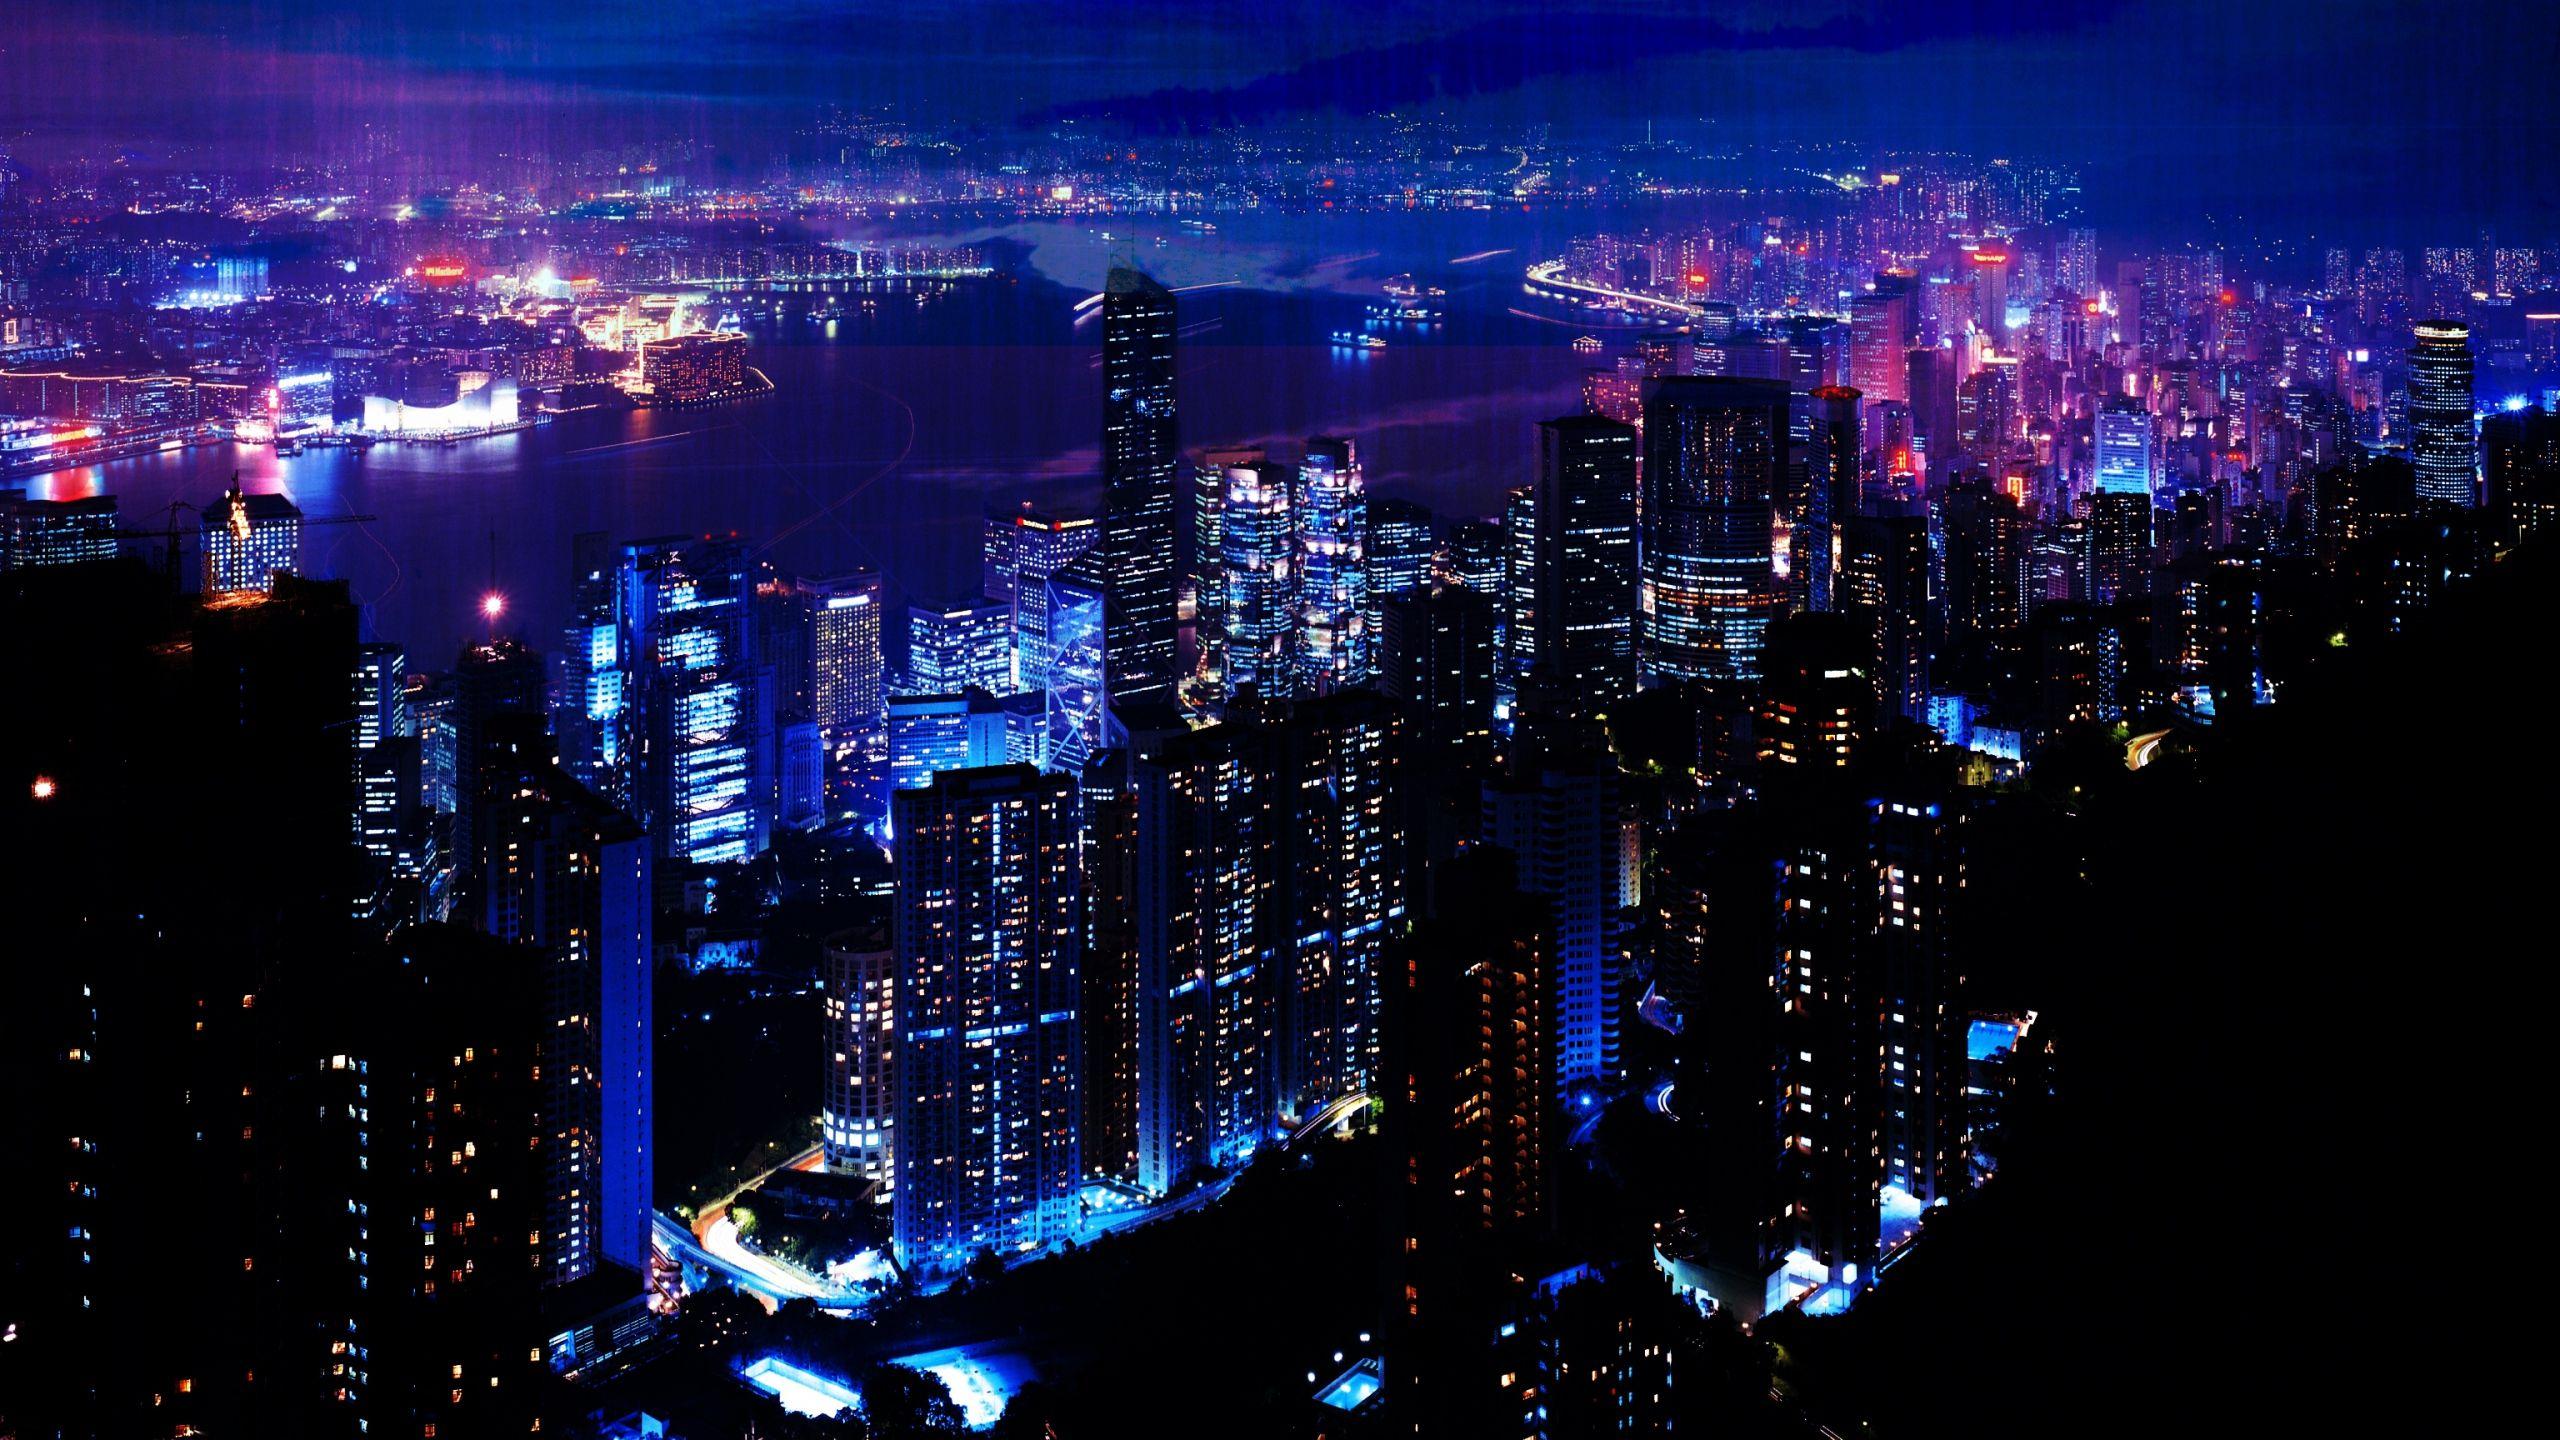 Night City Wallpaper High Quality. City wallpaper, Aesthetic desktop wallpaper, City lights wallpaper